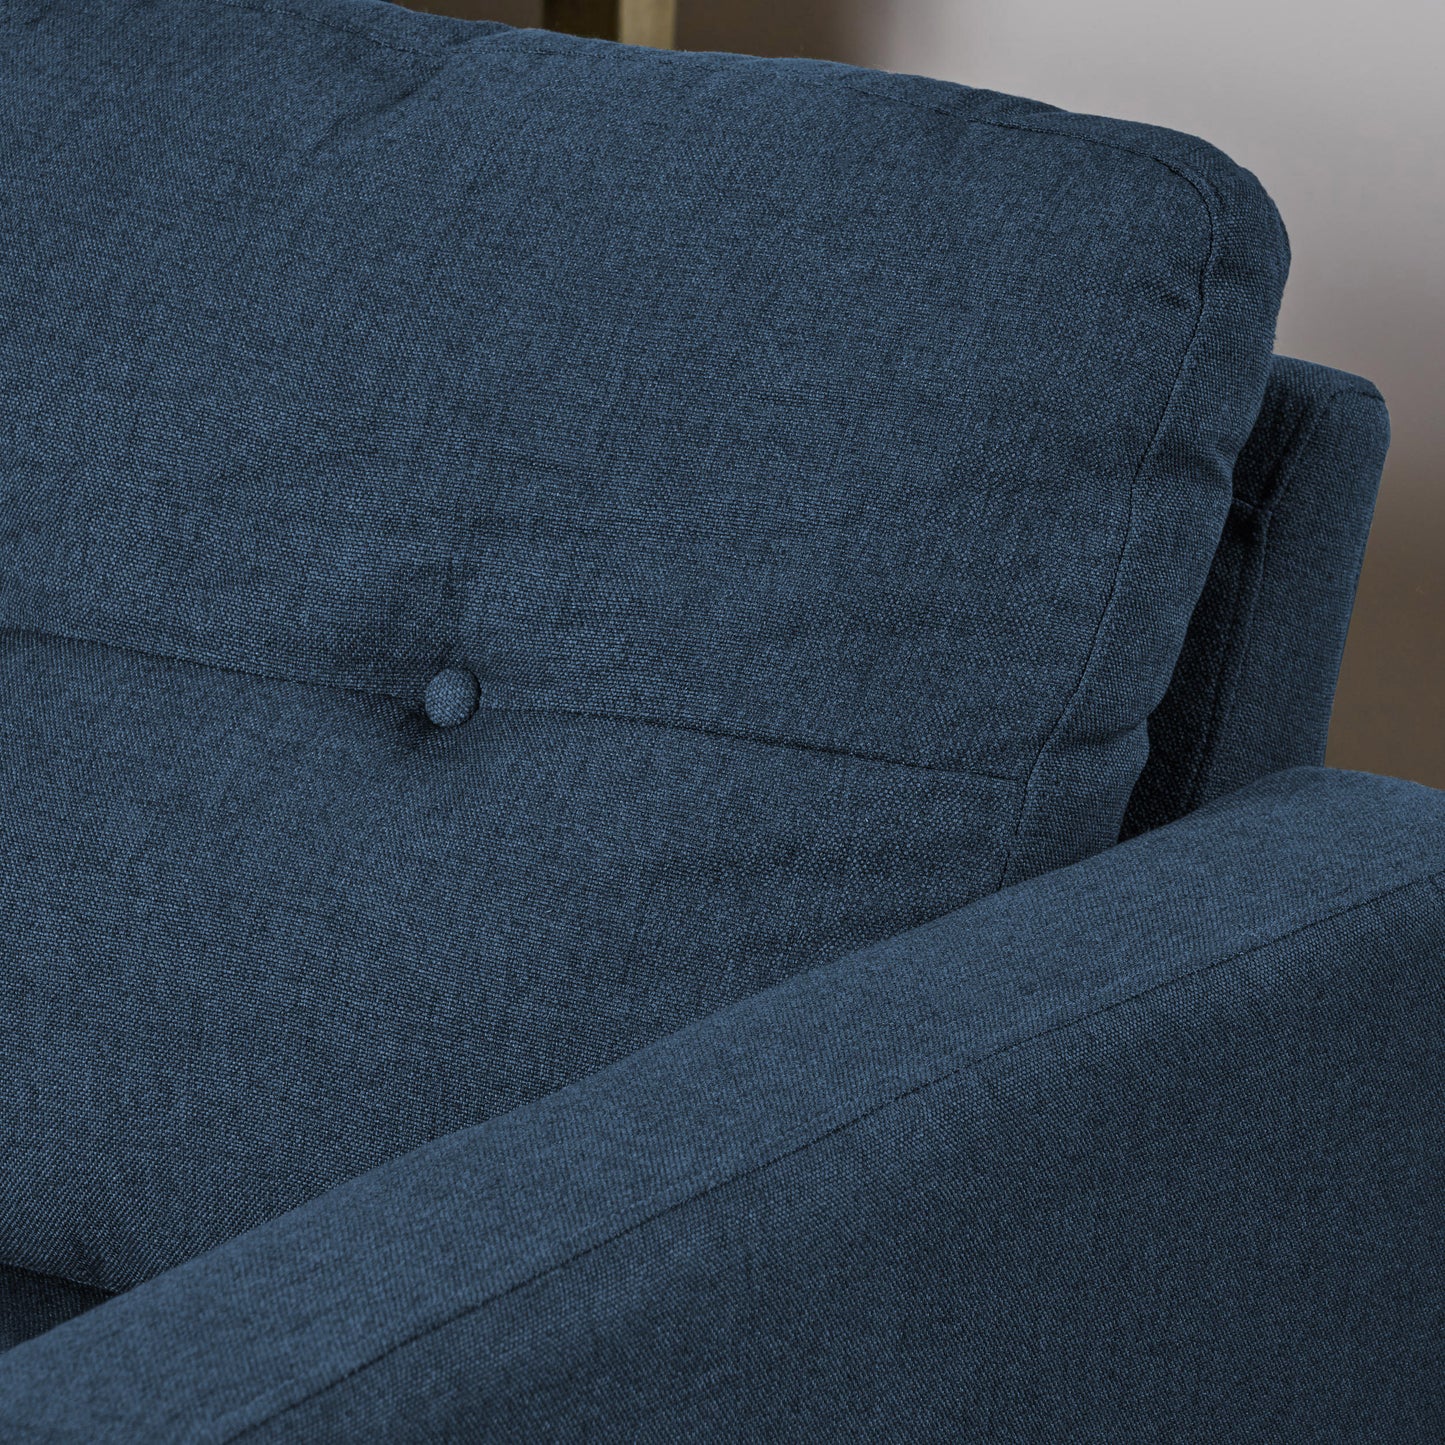 Niya Mid Century Modern 10 Piece Fabric U-Shaped Sectional Sofa